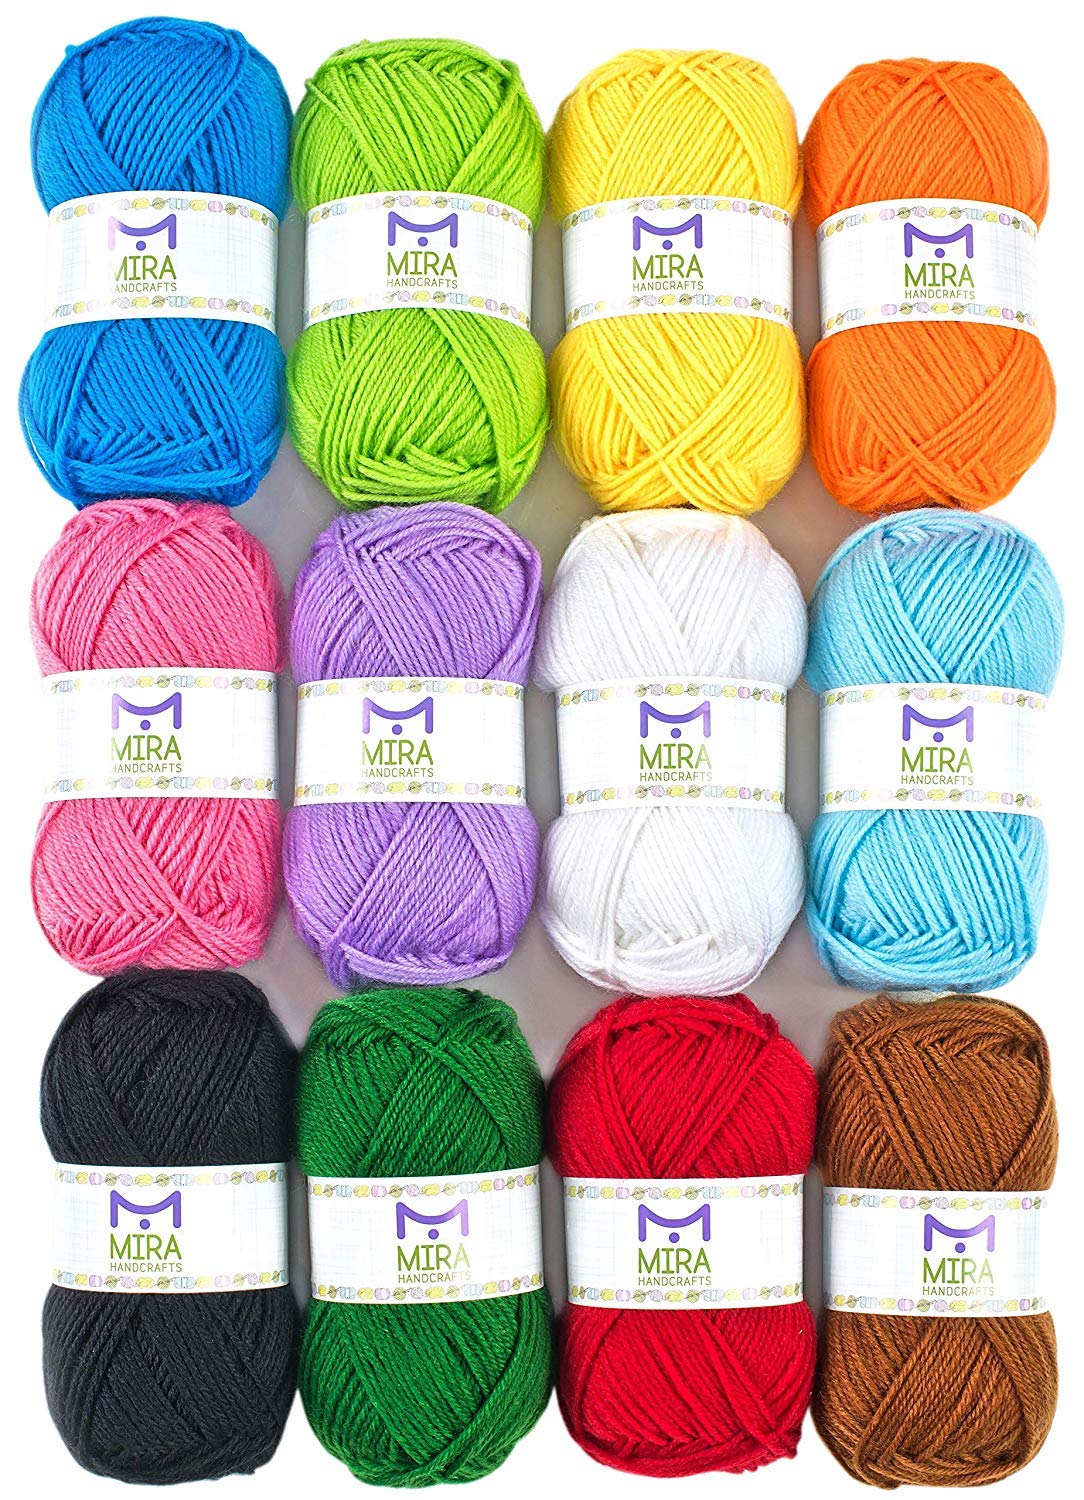 Mira Handcrafts 8 Acrylic Yarn Bonbons | Total of 525 yards Craft Yarn |  Includes 2 Crochet Hooks, 2 Weaving Needles, 7 E-books | DK Yarn for  Knitting